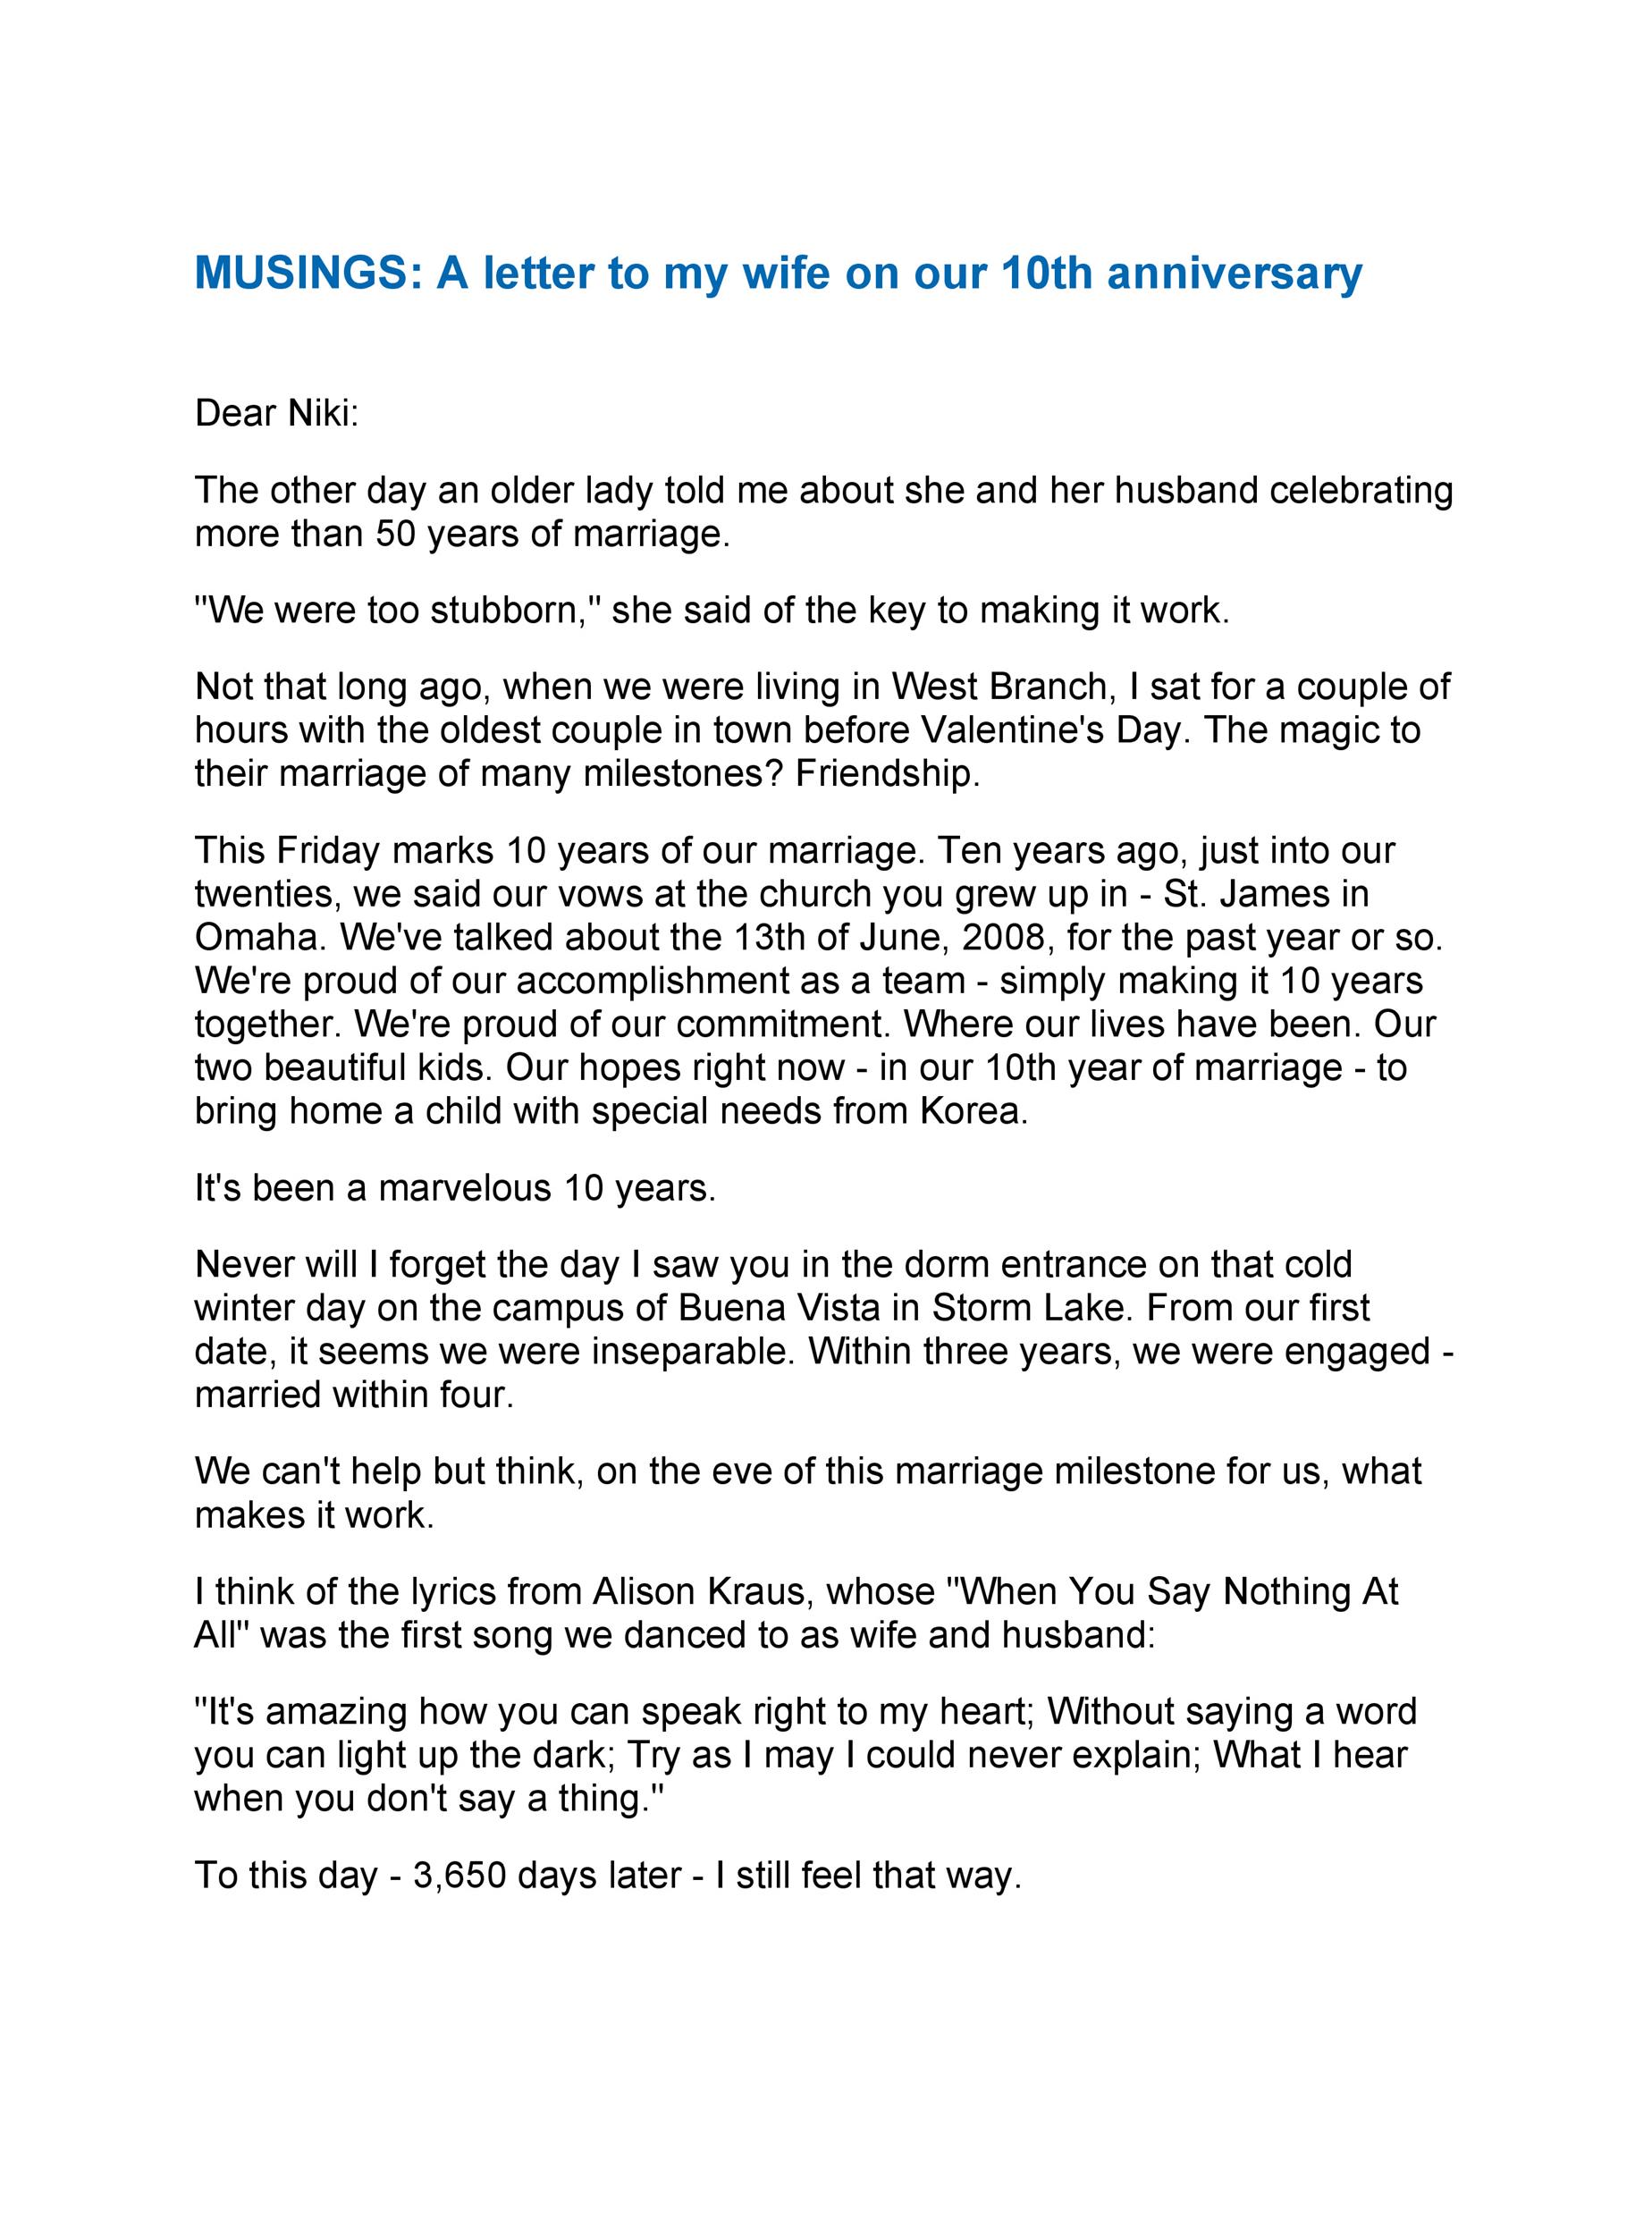 Sweet anniversary letter for girlfriend